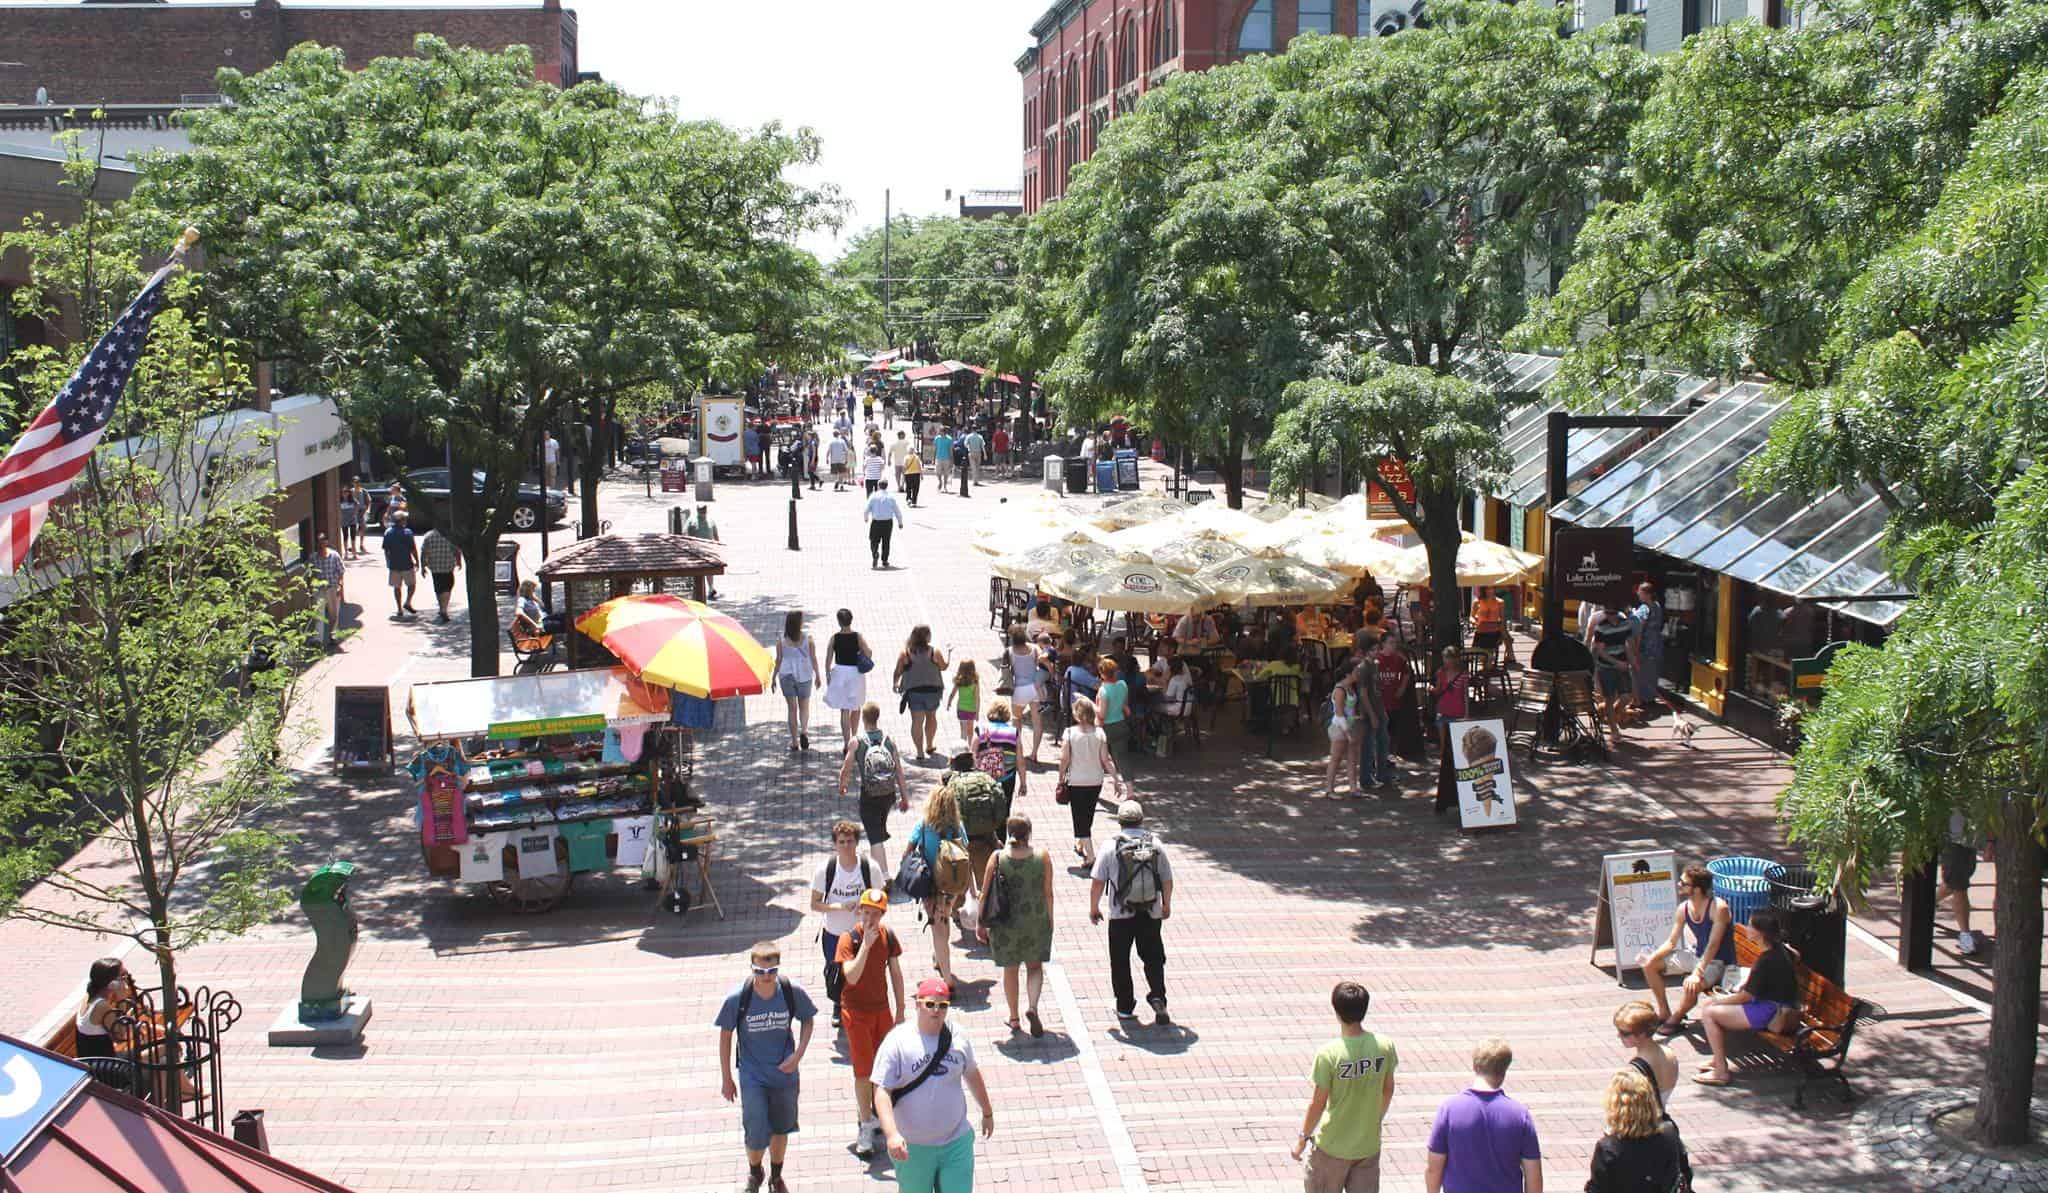 Church Street Marketplace - Summertime Shopping